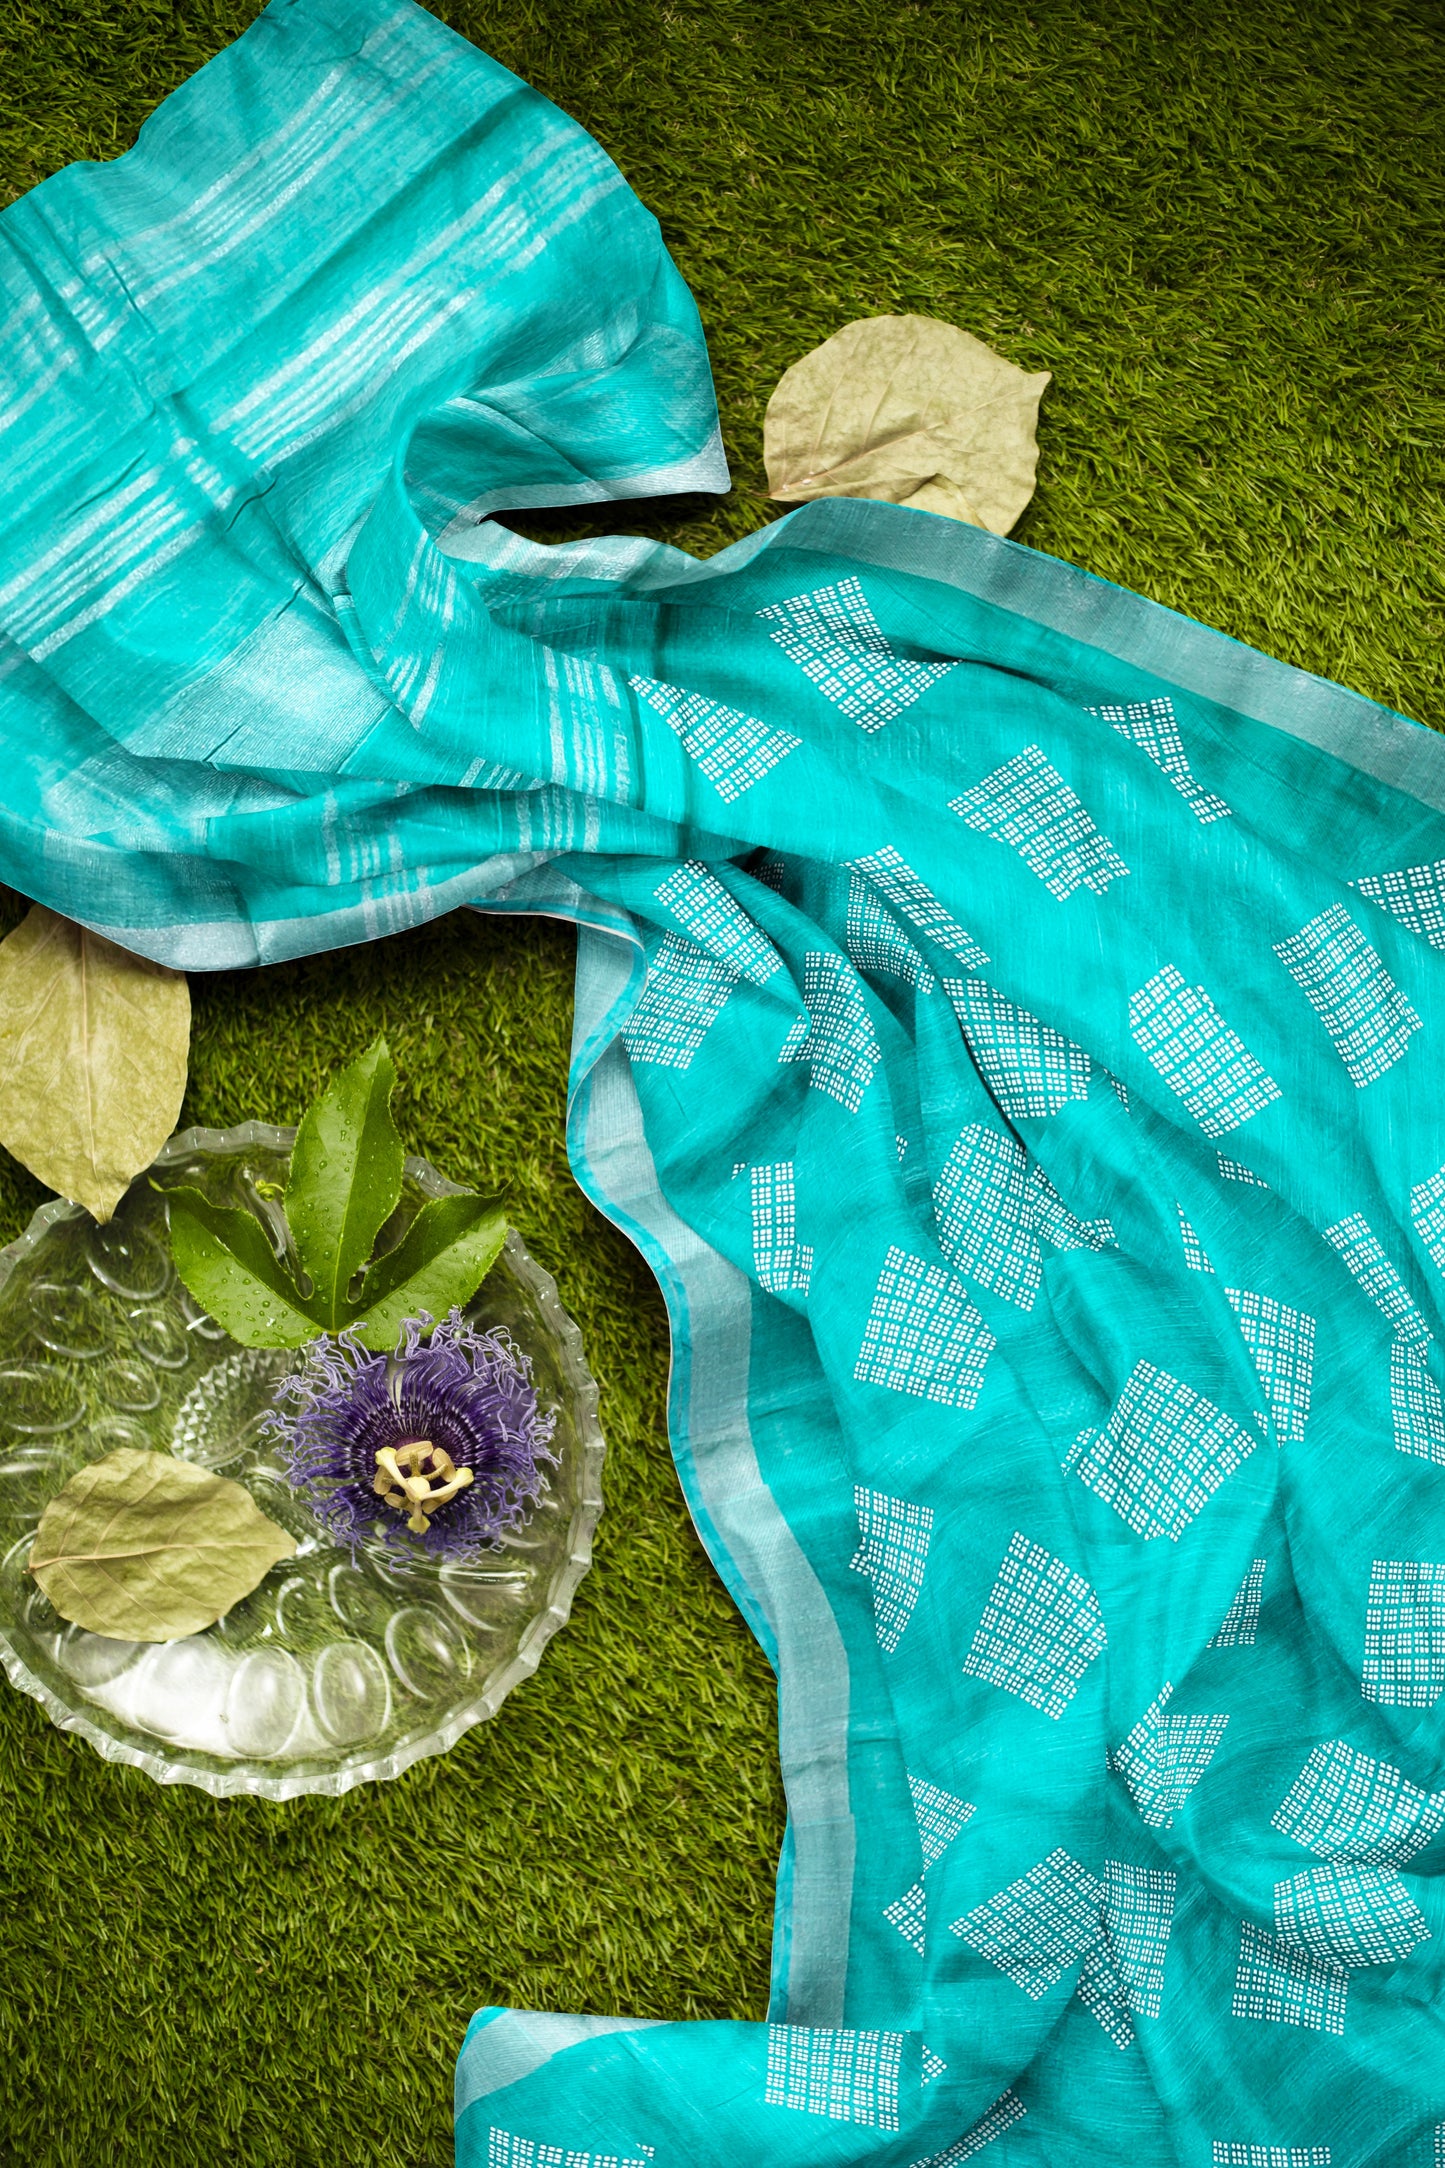 Southloom Linen Cotton Turquoise Designer Saree